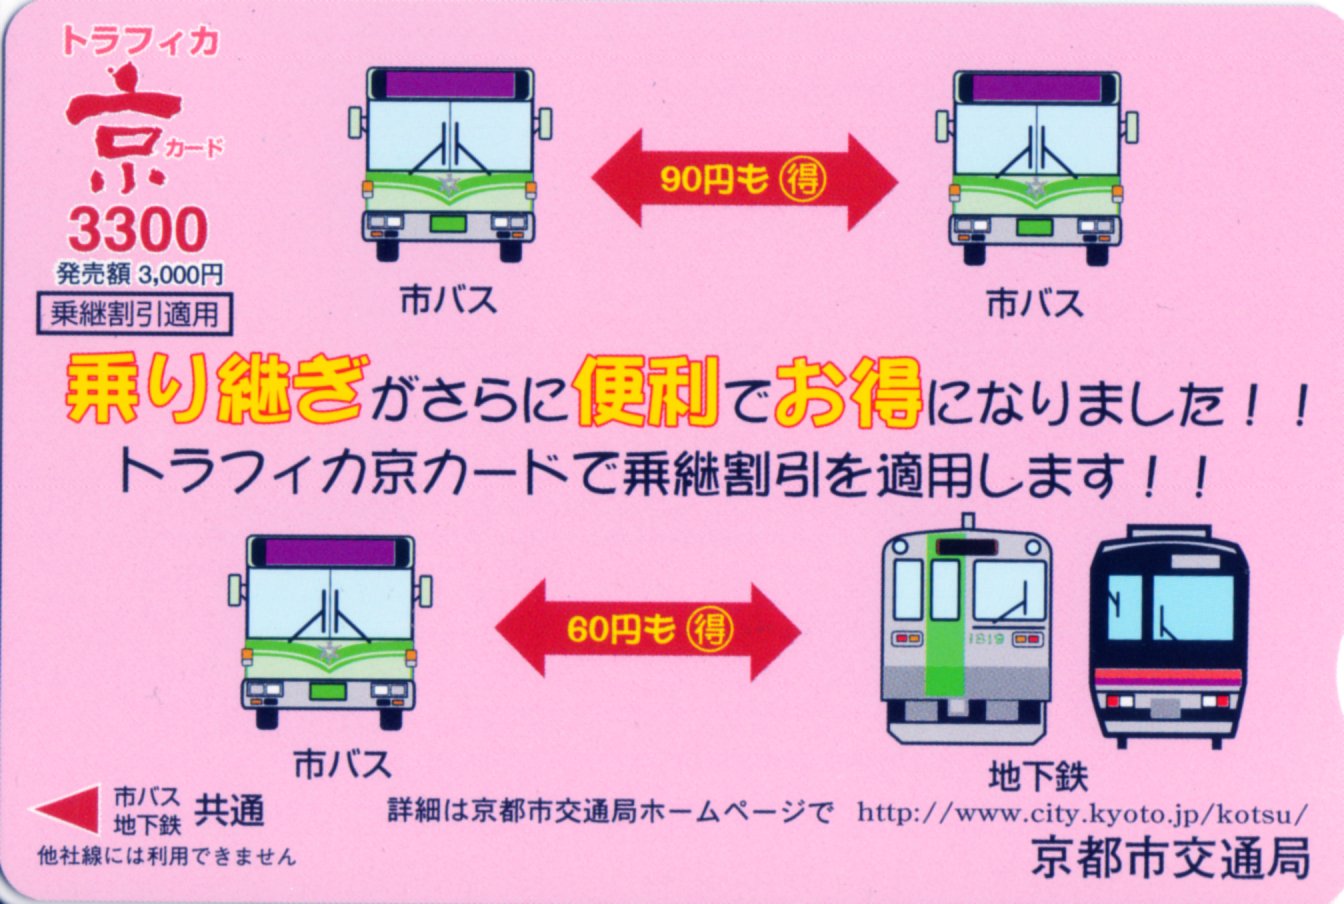 Kyoto Municipal Transportation Bureau  Kyo Card